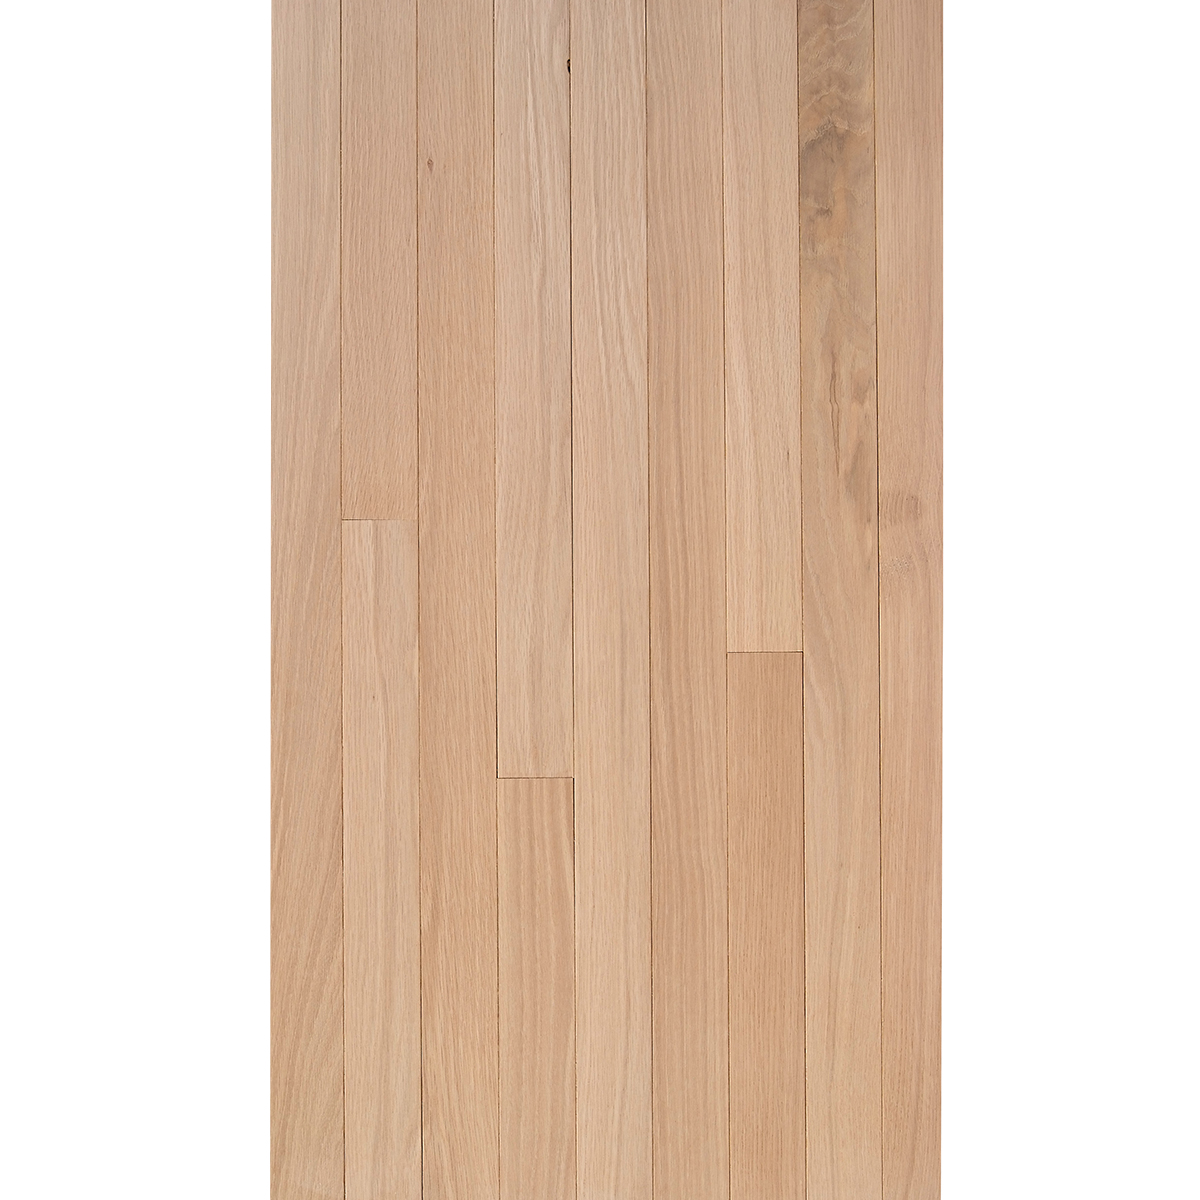 White Oak 3 4 X 2 1 Select Grade, 1 1 2 Inch Oak Hardwood Flooring